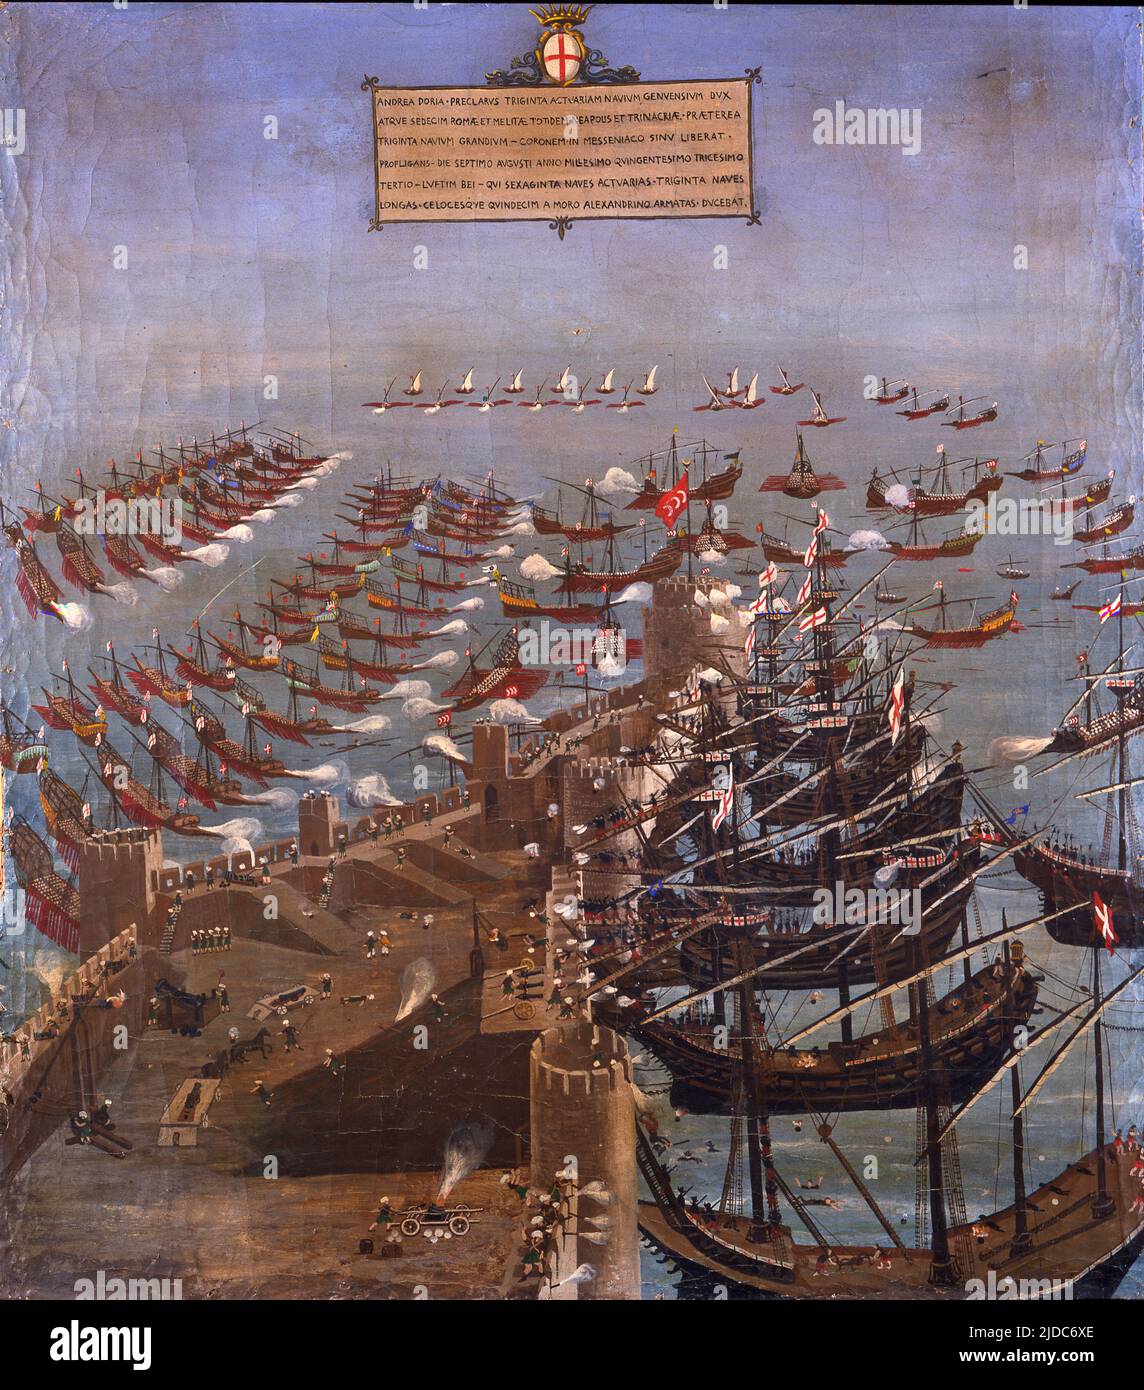 Christian fleet under the command of Andrea Doria conquering Corone in 1532, Greece, oil on canvas, 16th century. Stock Photo